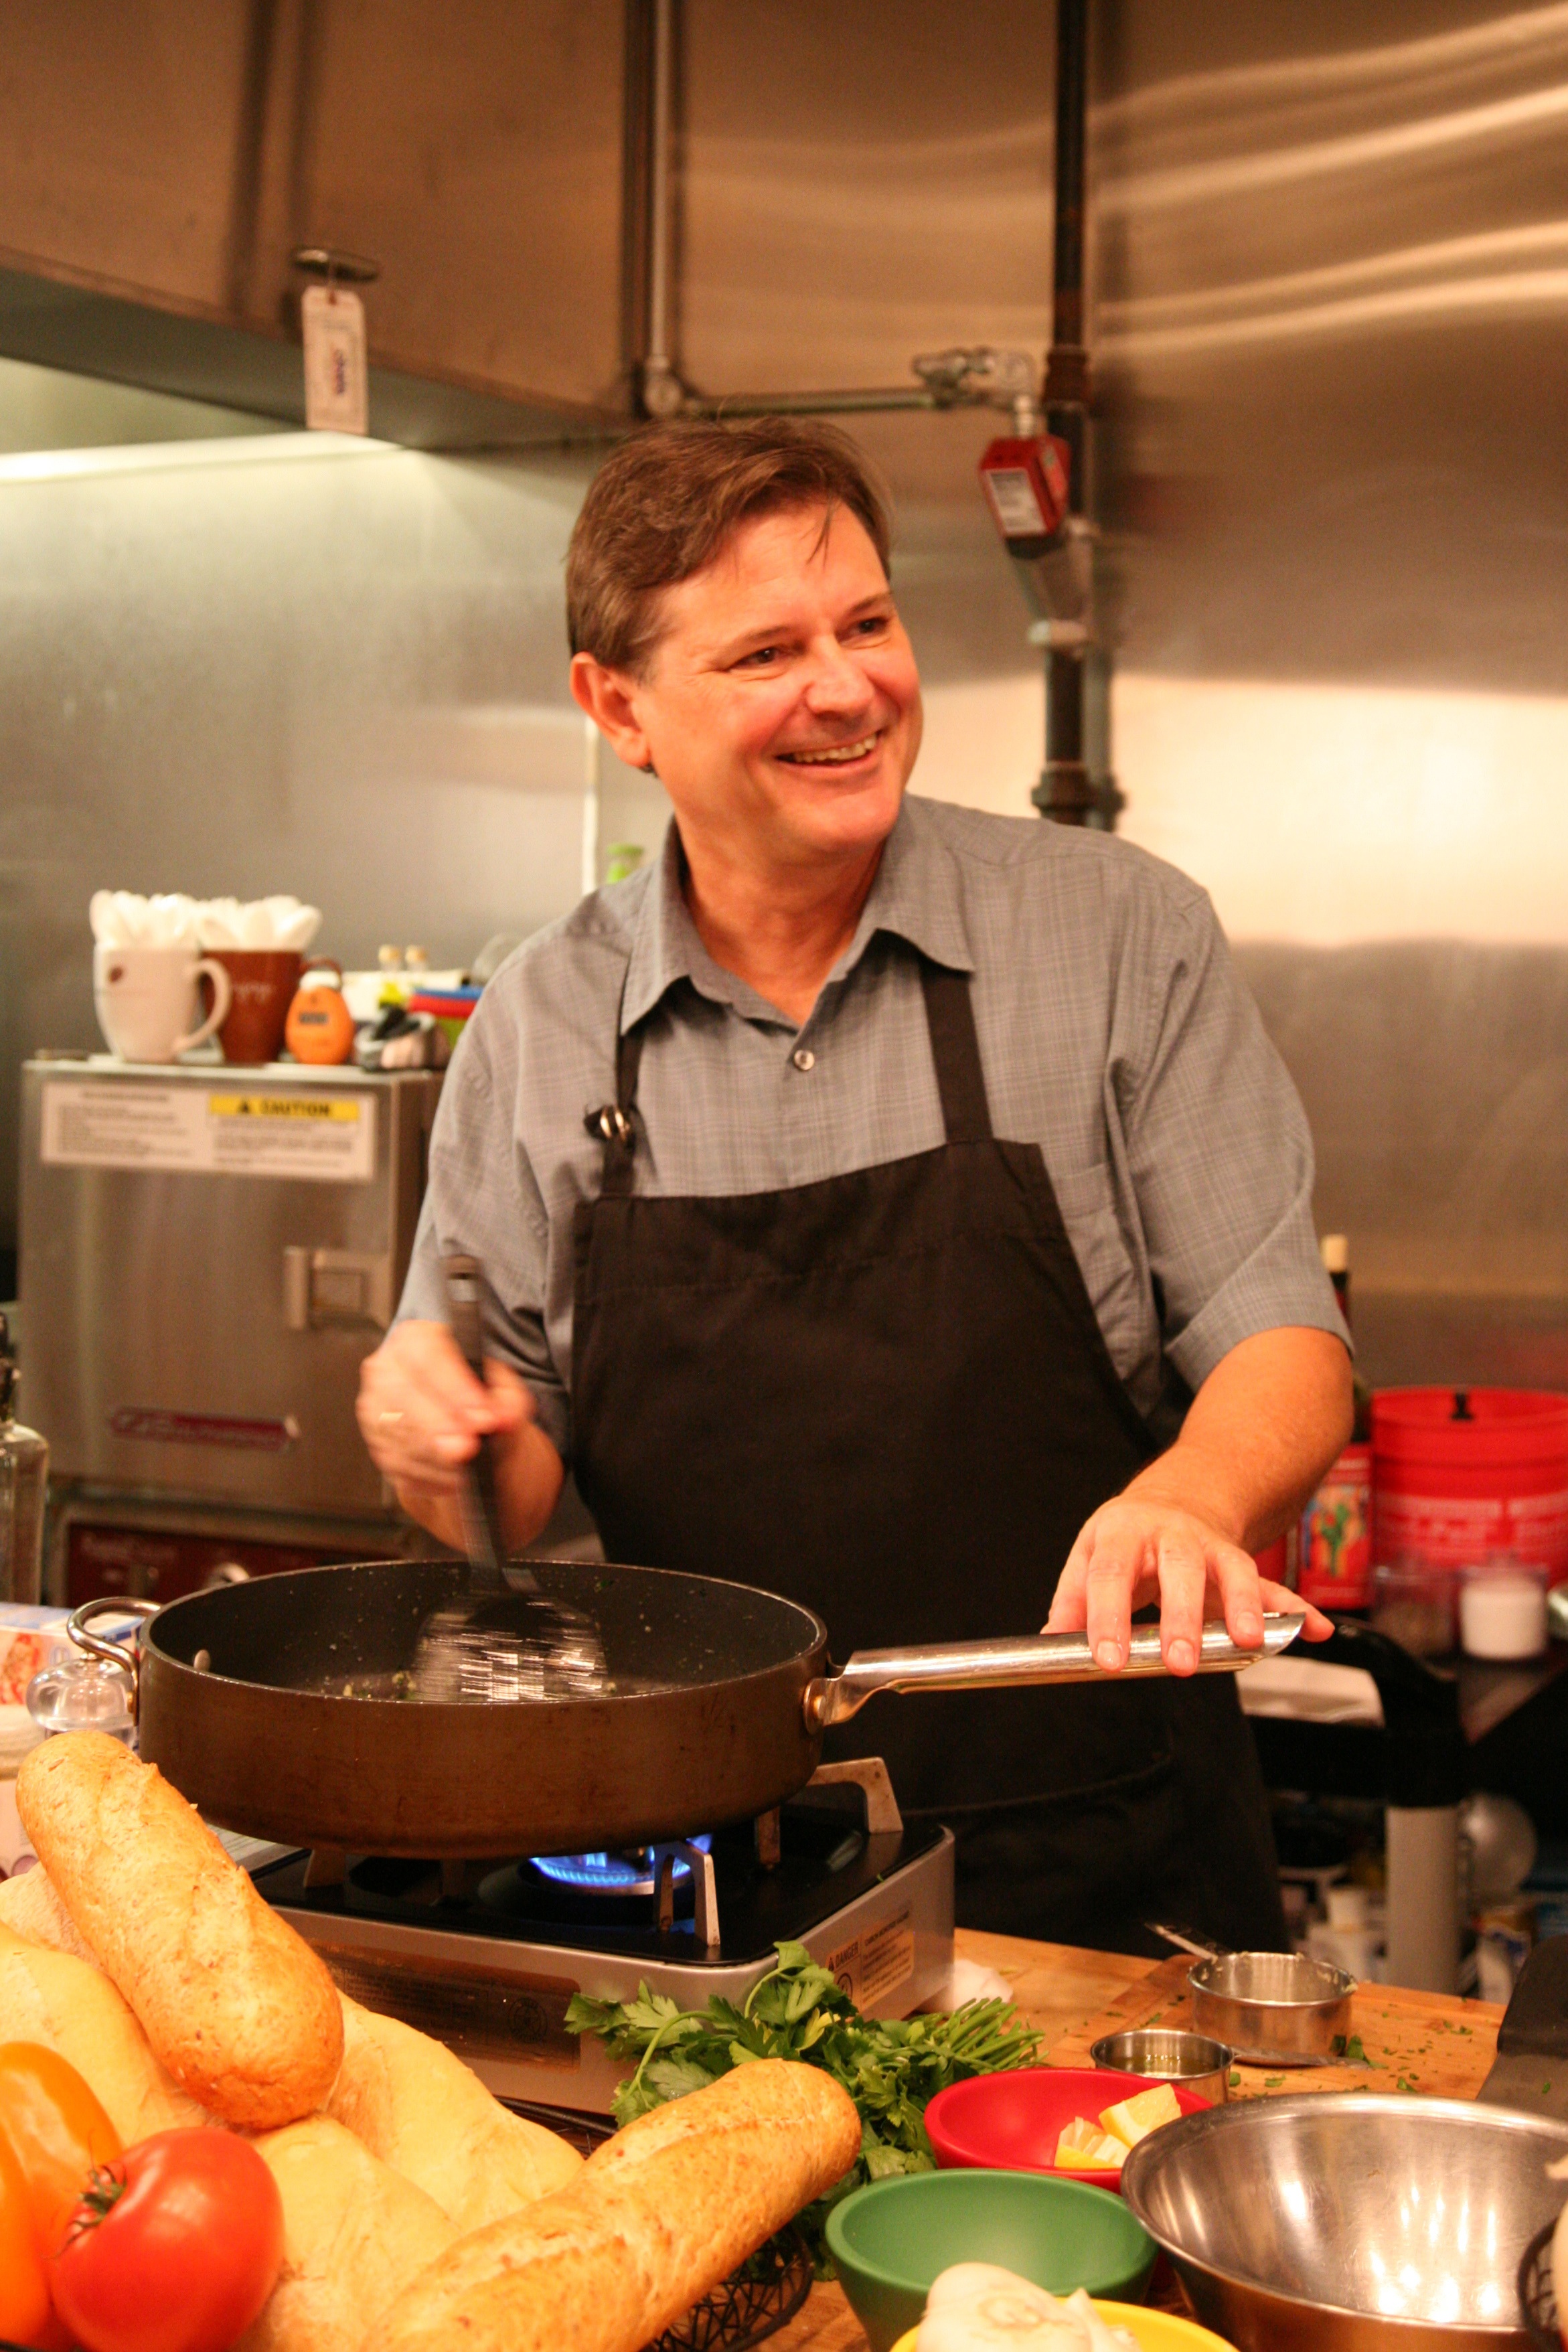 Chef Warren cooks over a hot pan.